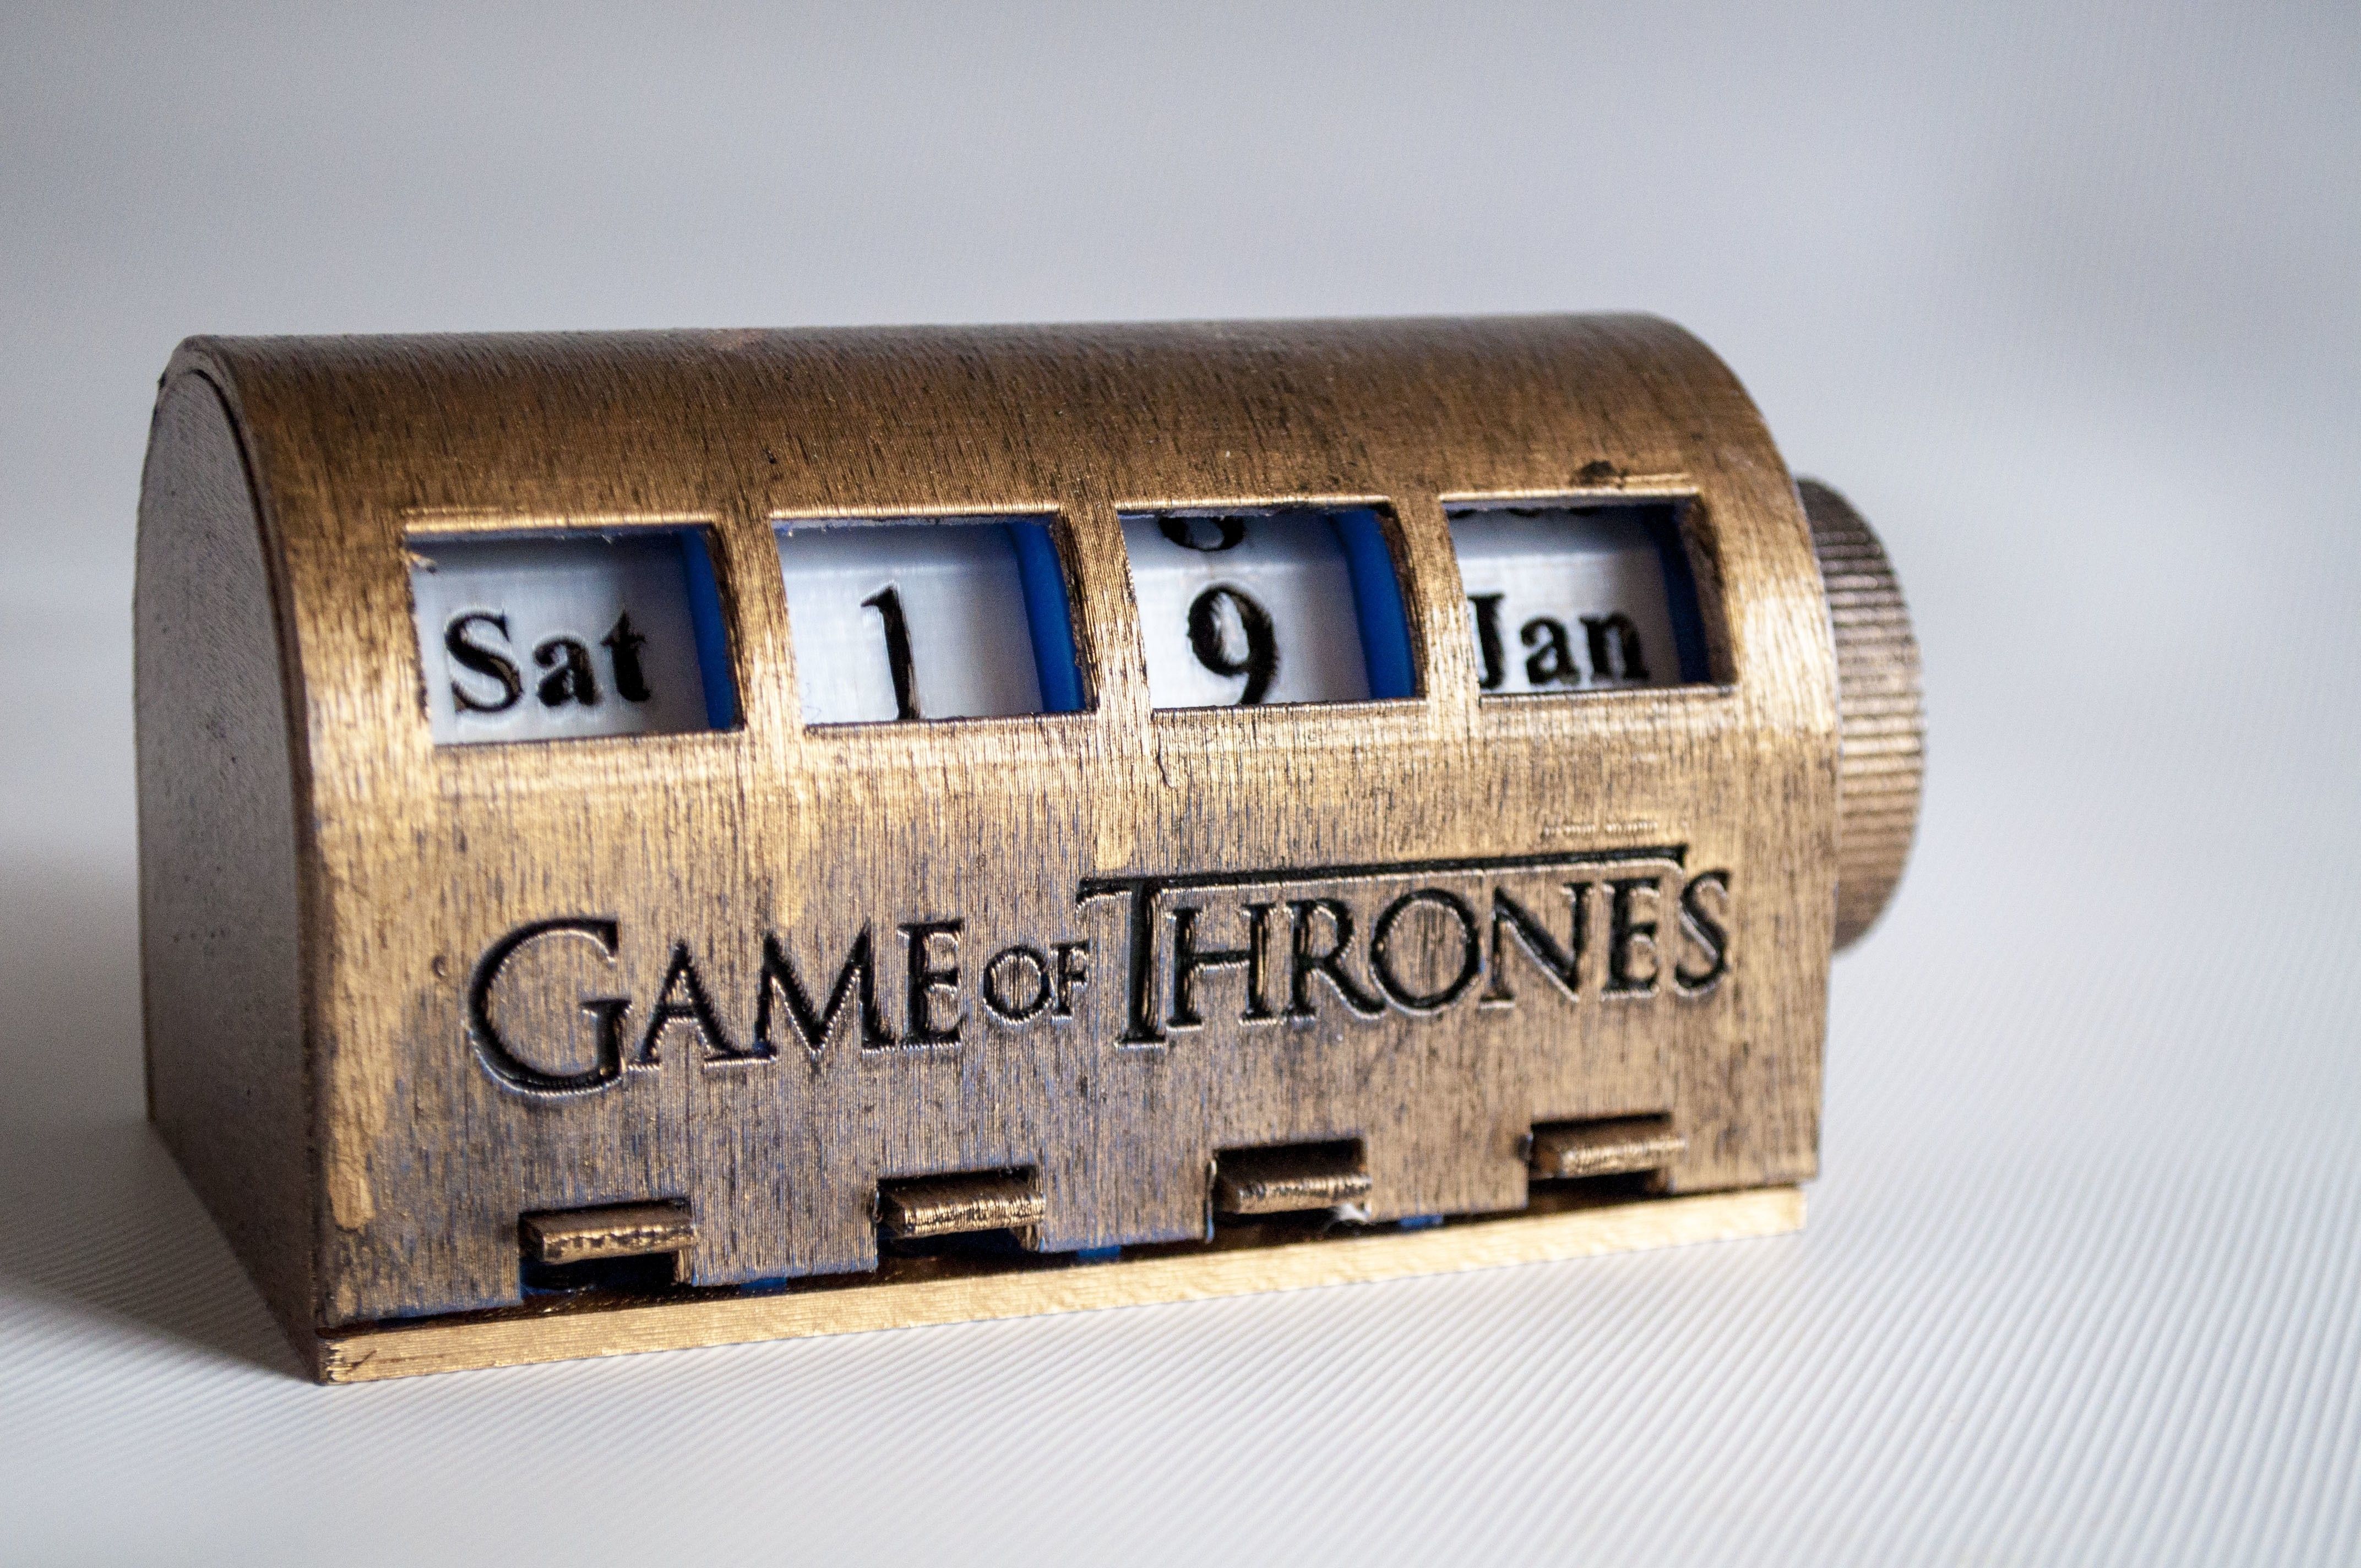 Free 3D file Game of Thrones Desk Calendar・3D printer model to download